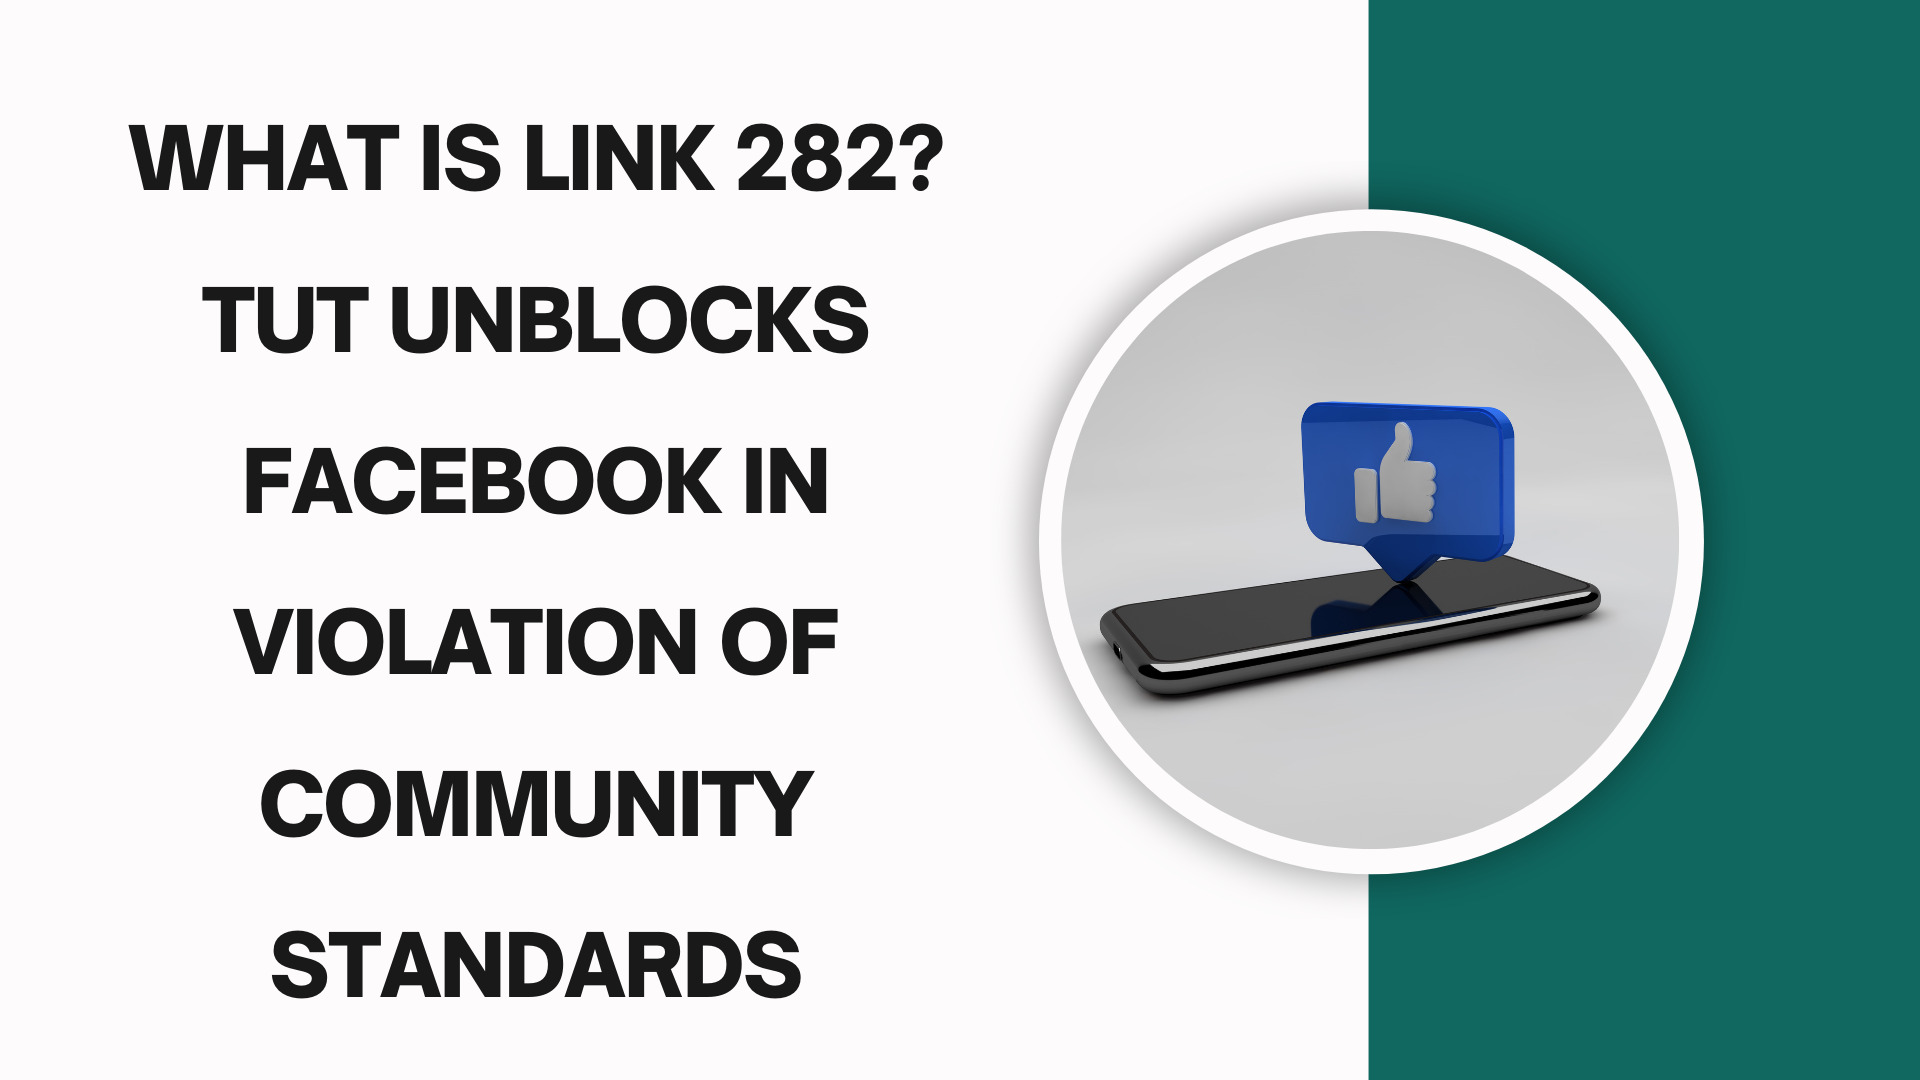 What is Link 282? TUT unblocks Facebook in violation of community standards